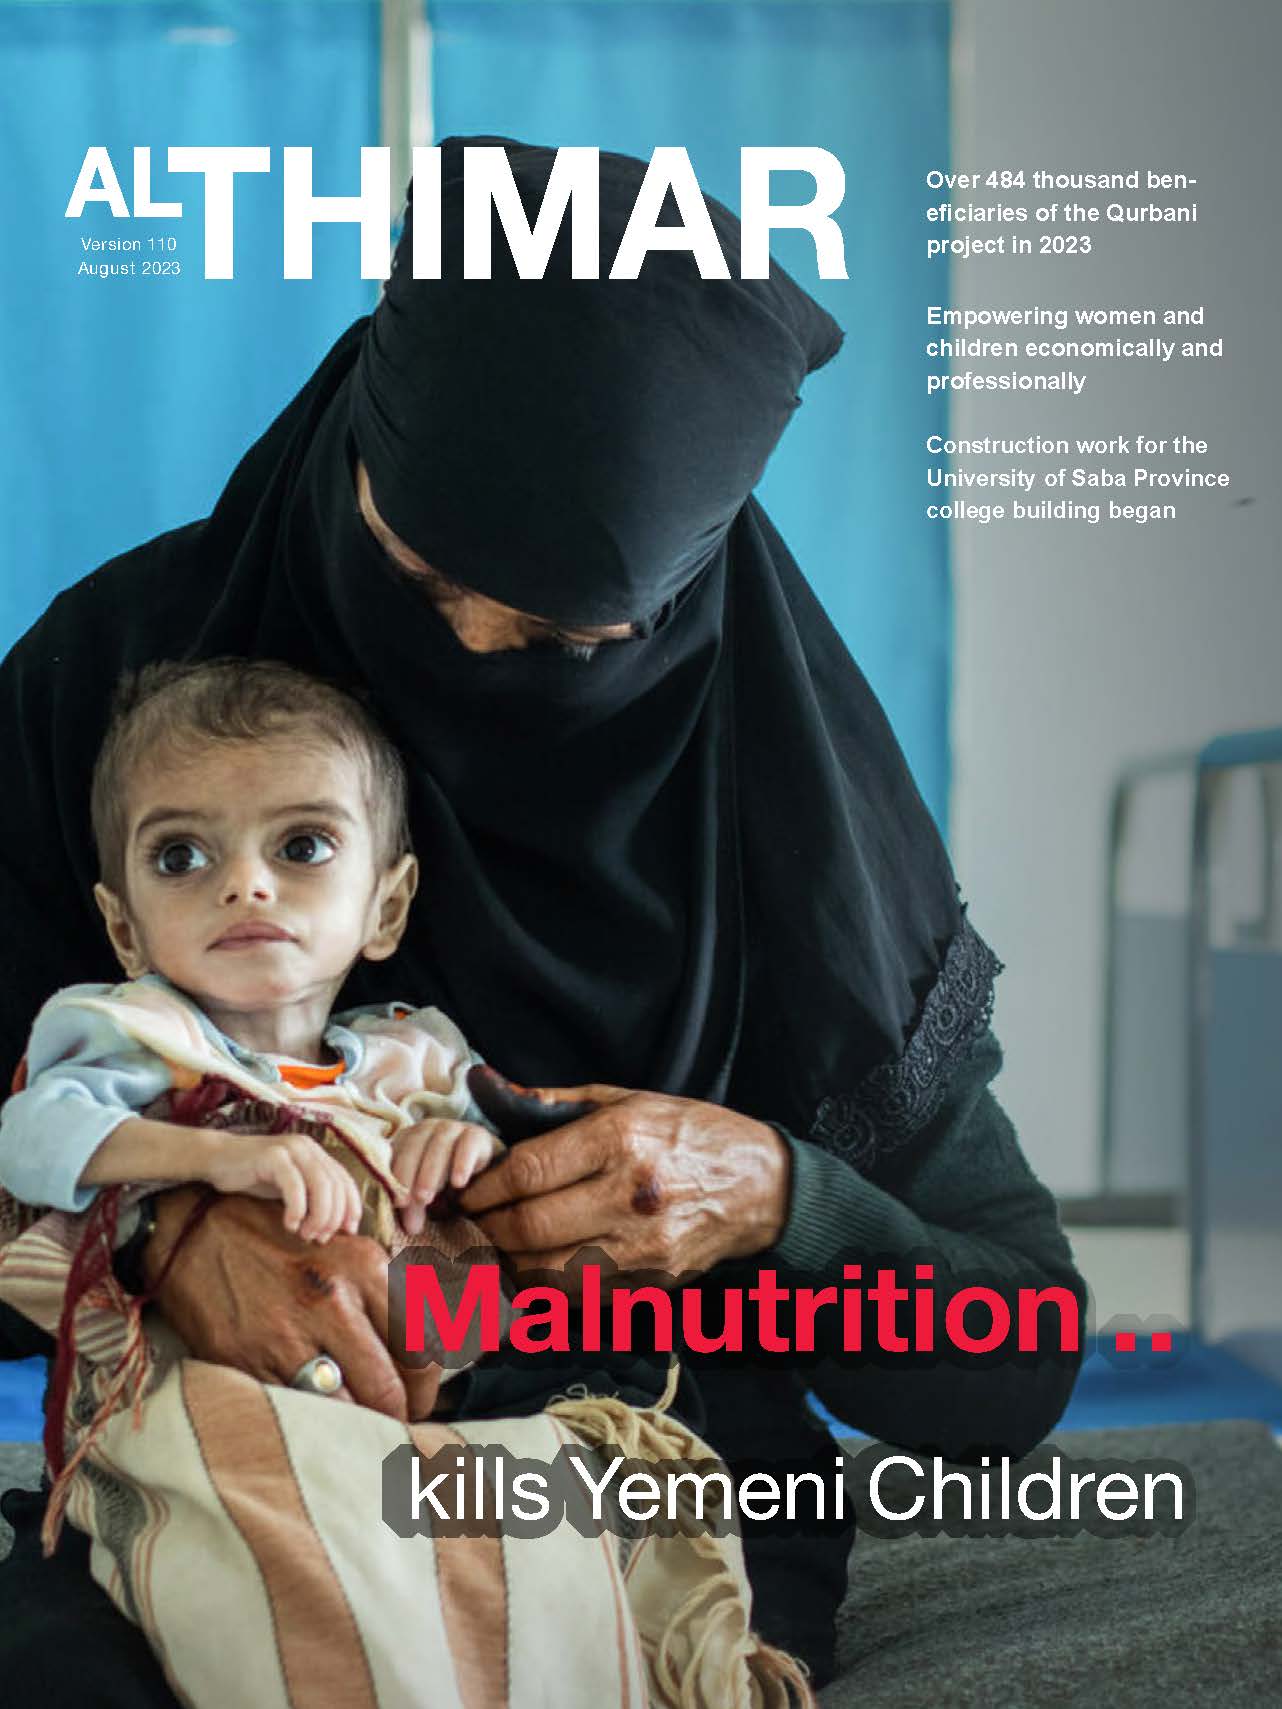 Al Thimar Magazine 110